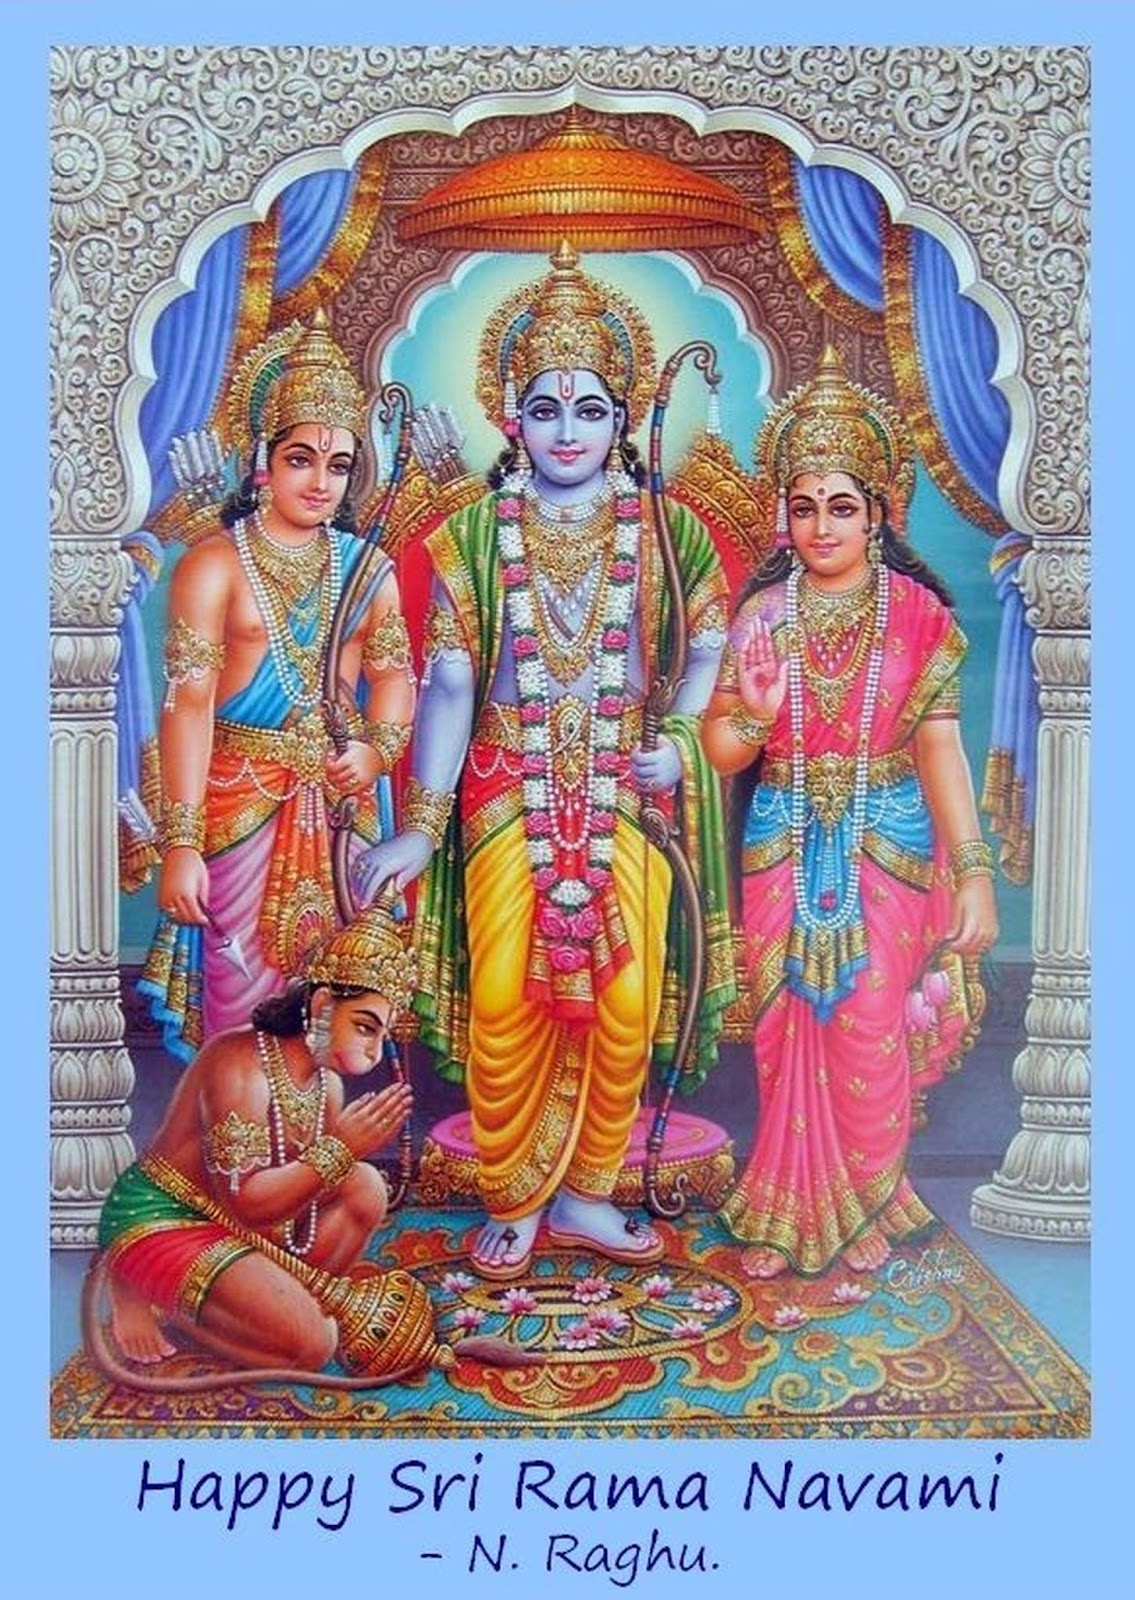 Raghu's column!: Happy Sri Rama Navami. May Lord Rama shower his ...